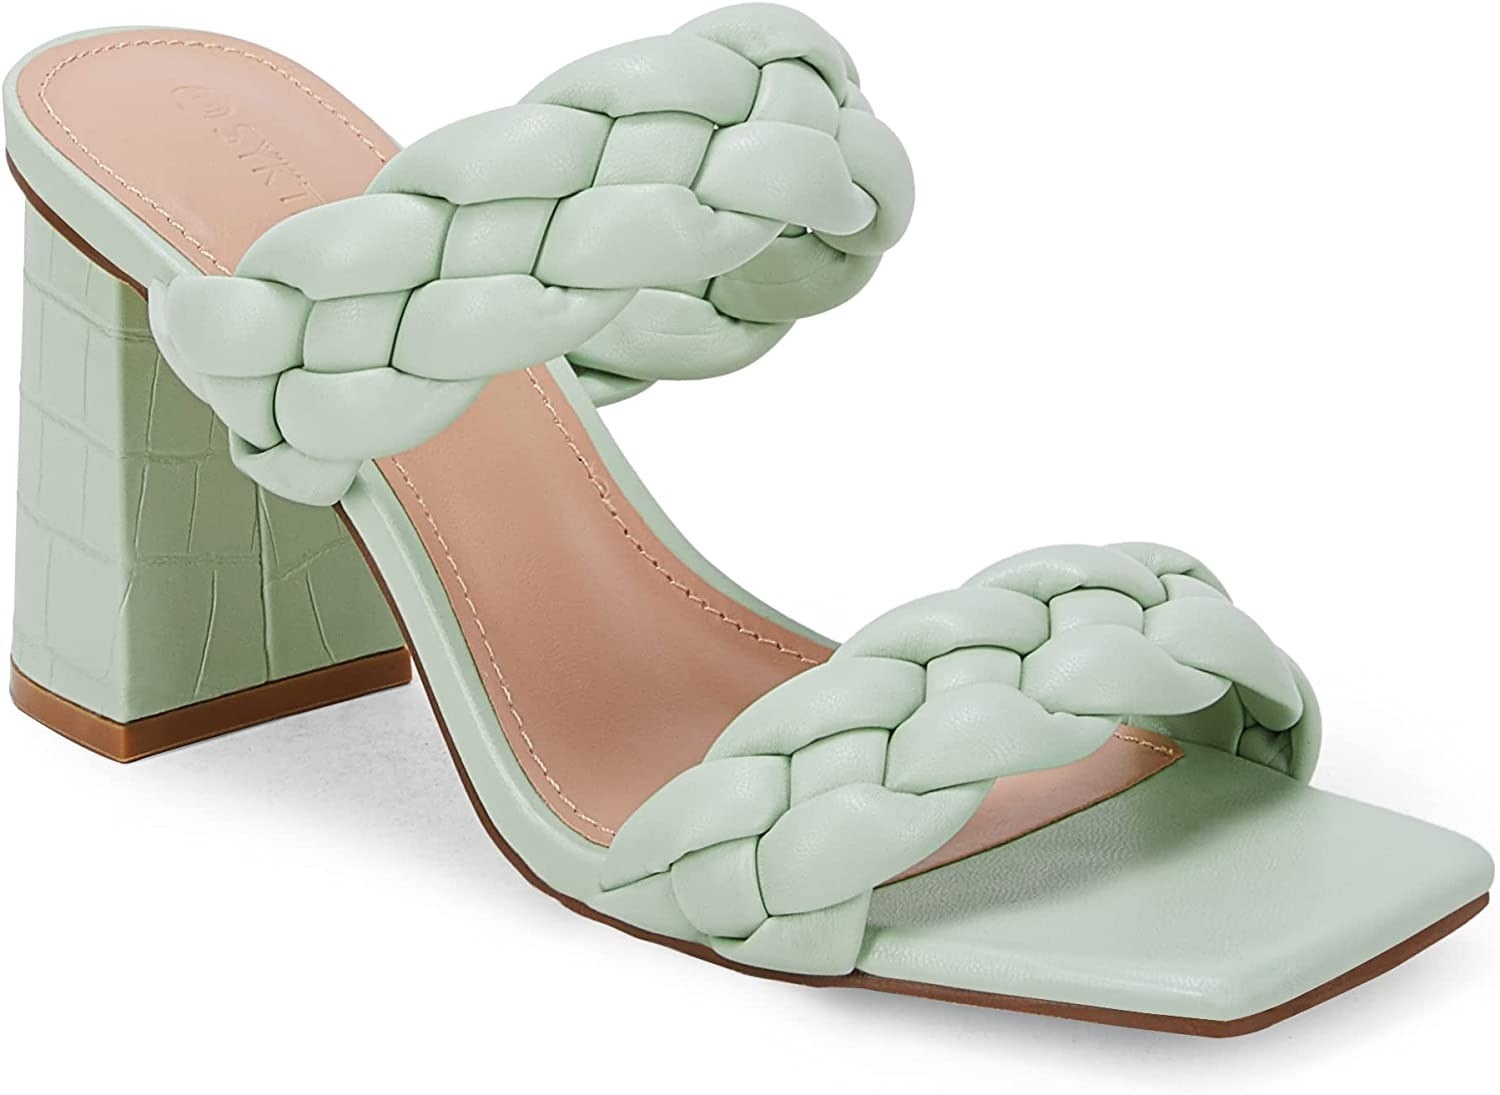 the mint green sandal